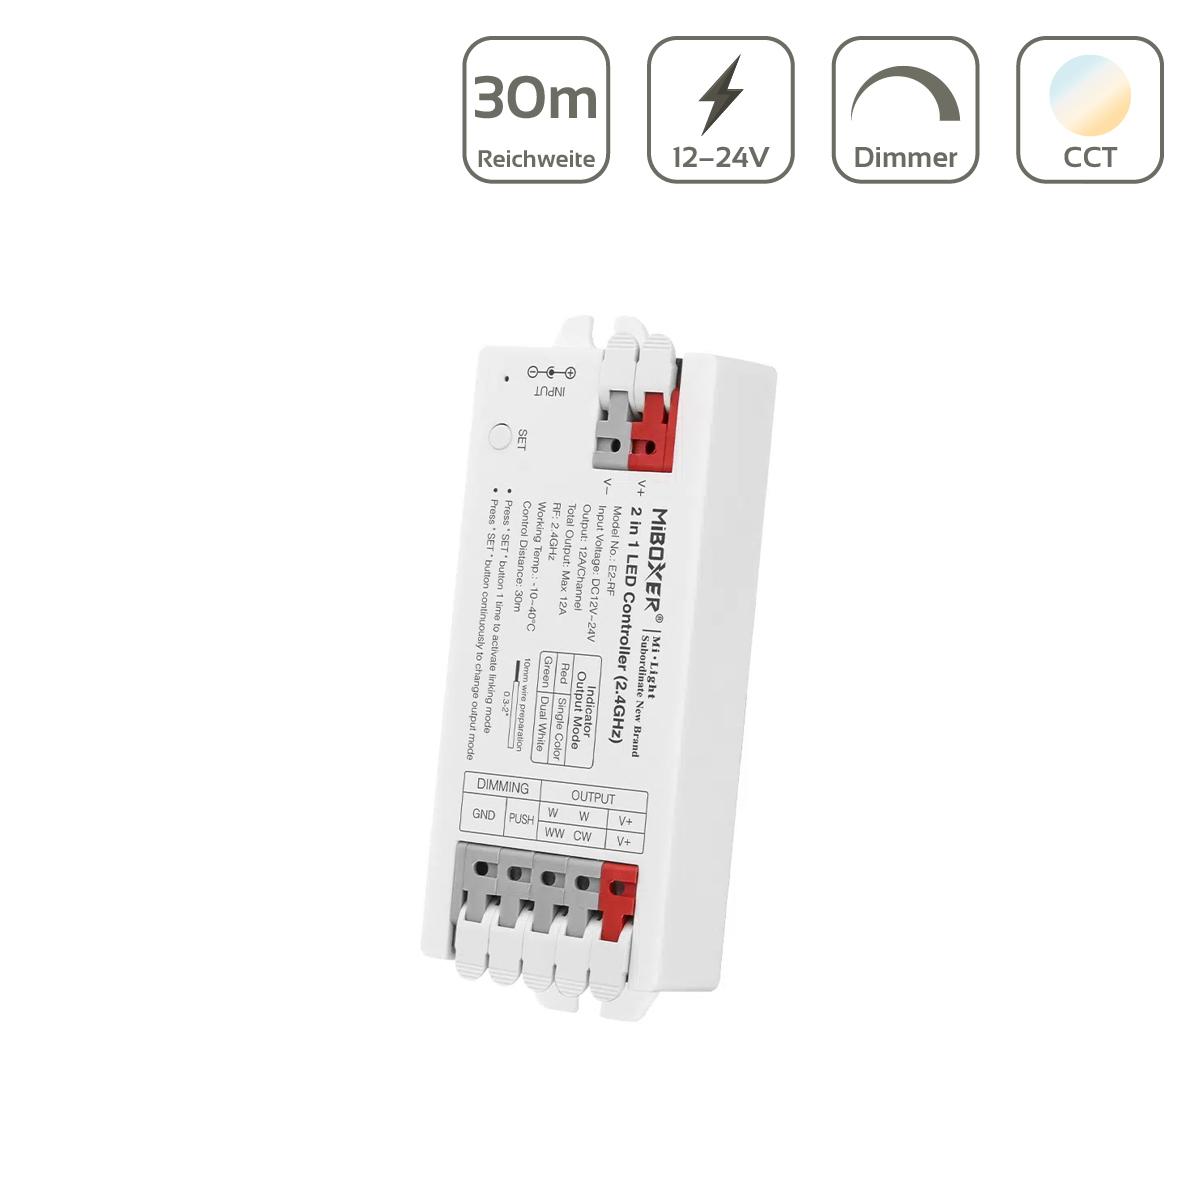 MiBoxer CCT LED Controller 2 in 1 Einfarbig / Dual White 12/24V Steuerung E2-RF